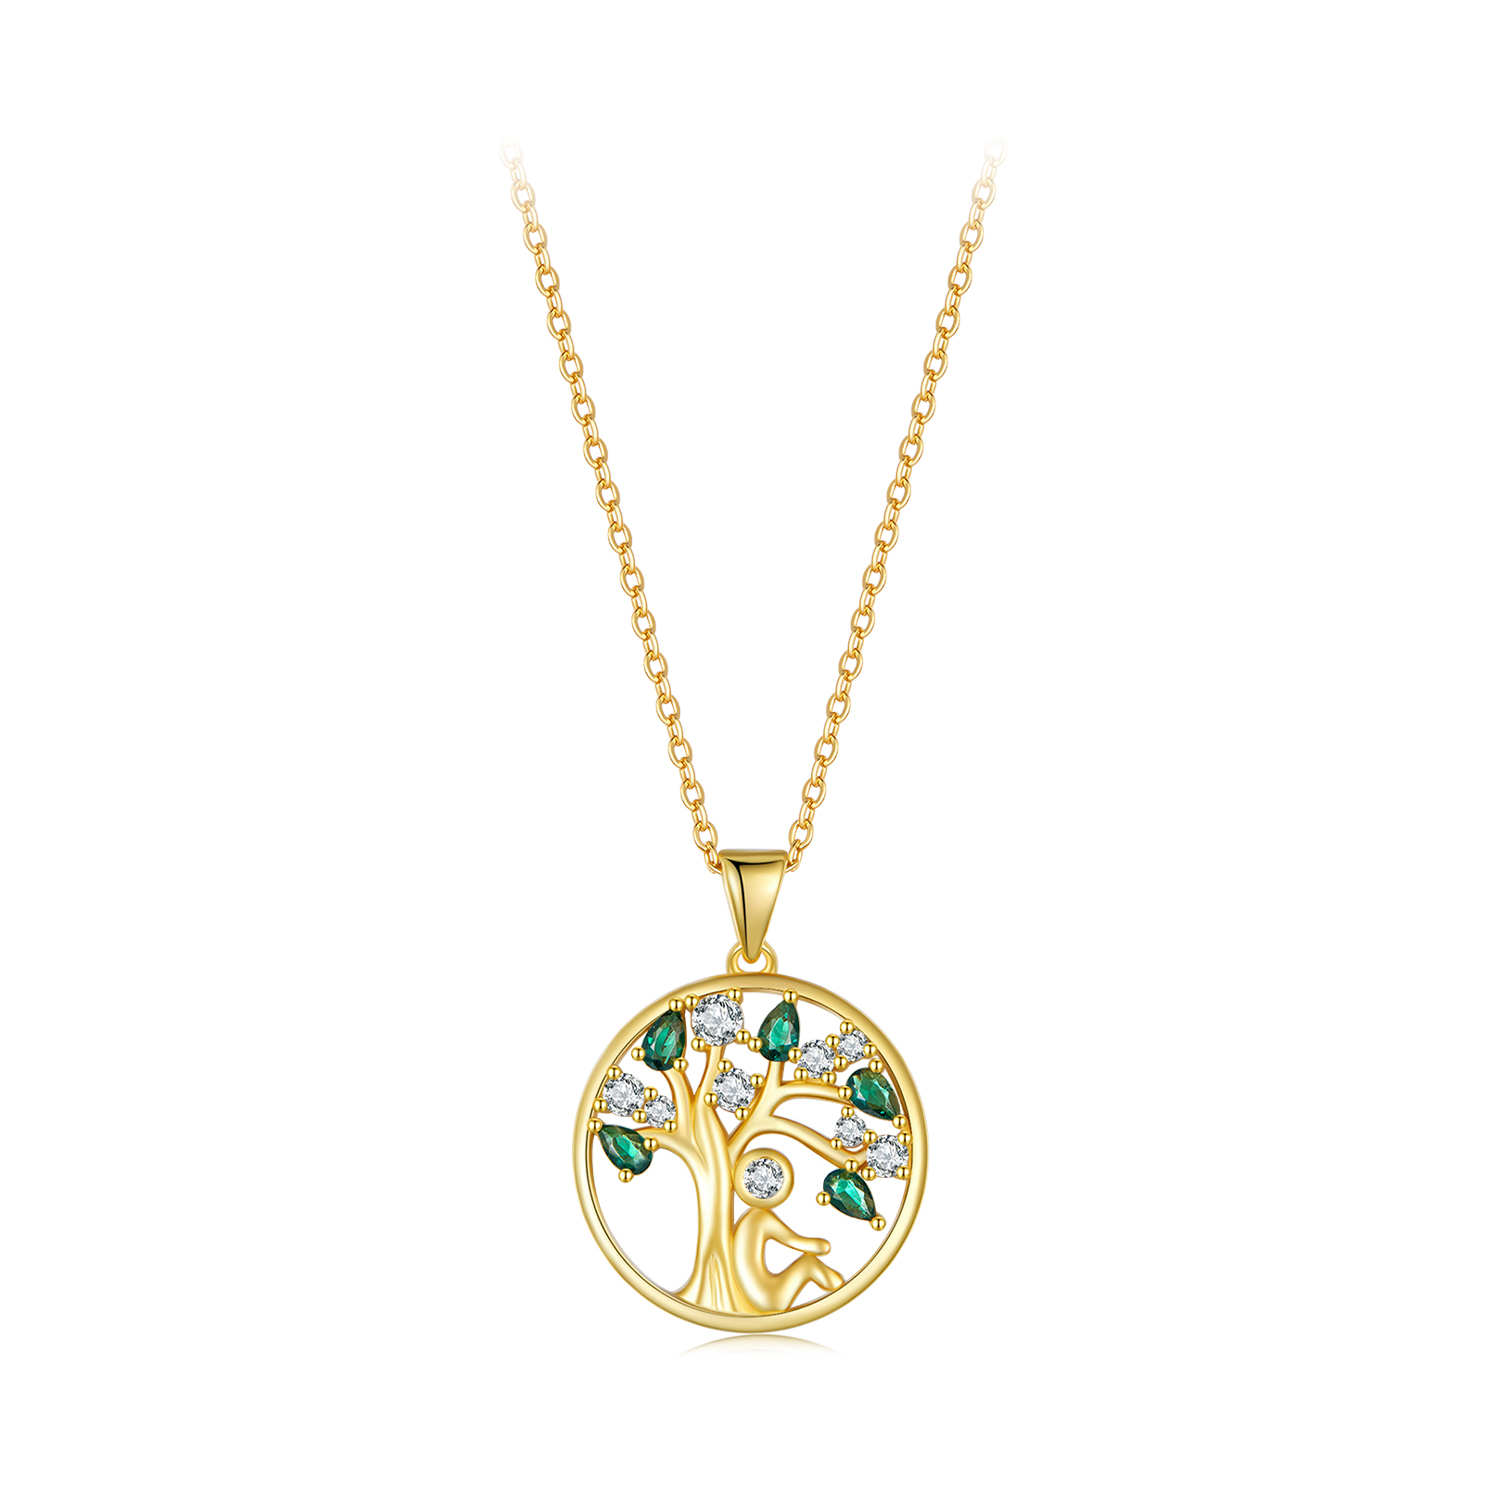 stunning golden life tree necklace scn094 b in pandora style